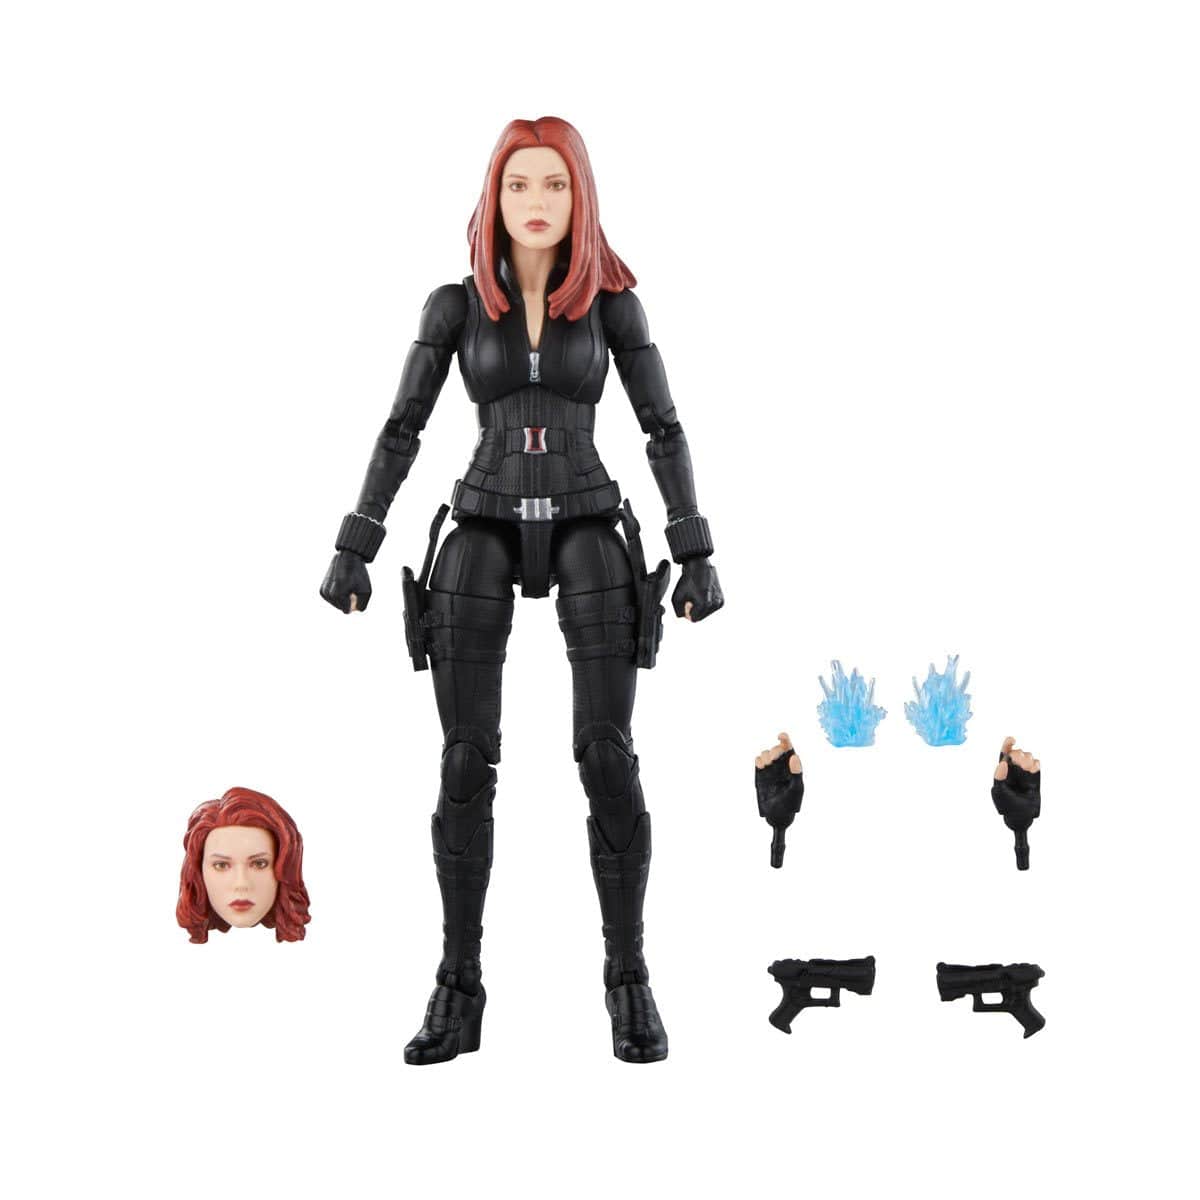 Captain America: The Winter Soldier Marvel Legends Black Widow 6-Inch Action Figure